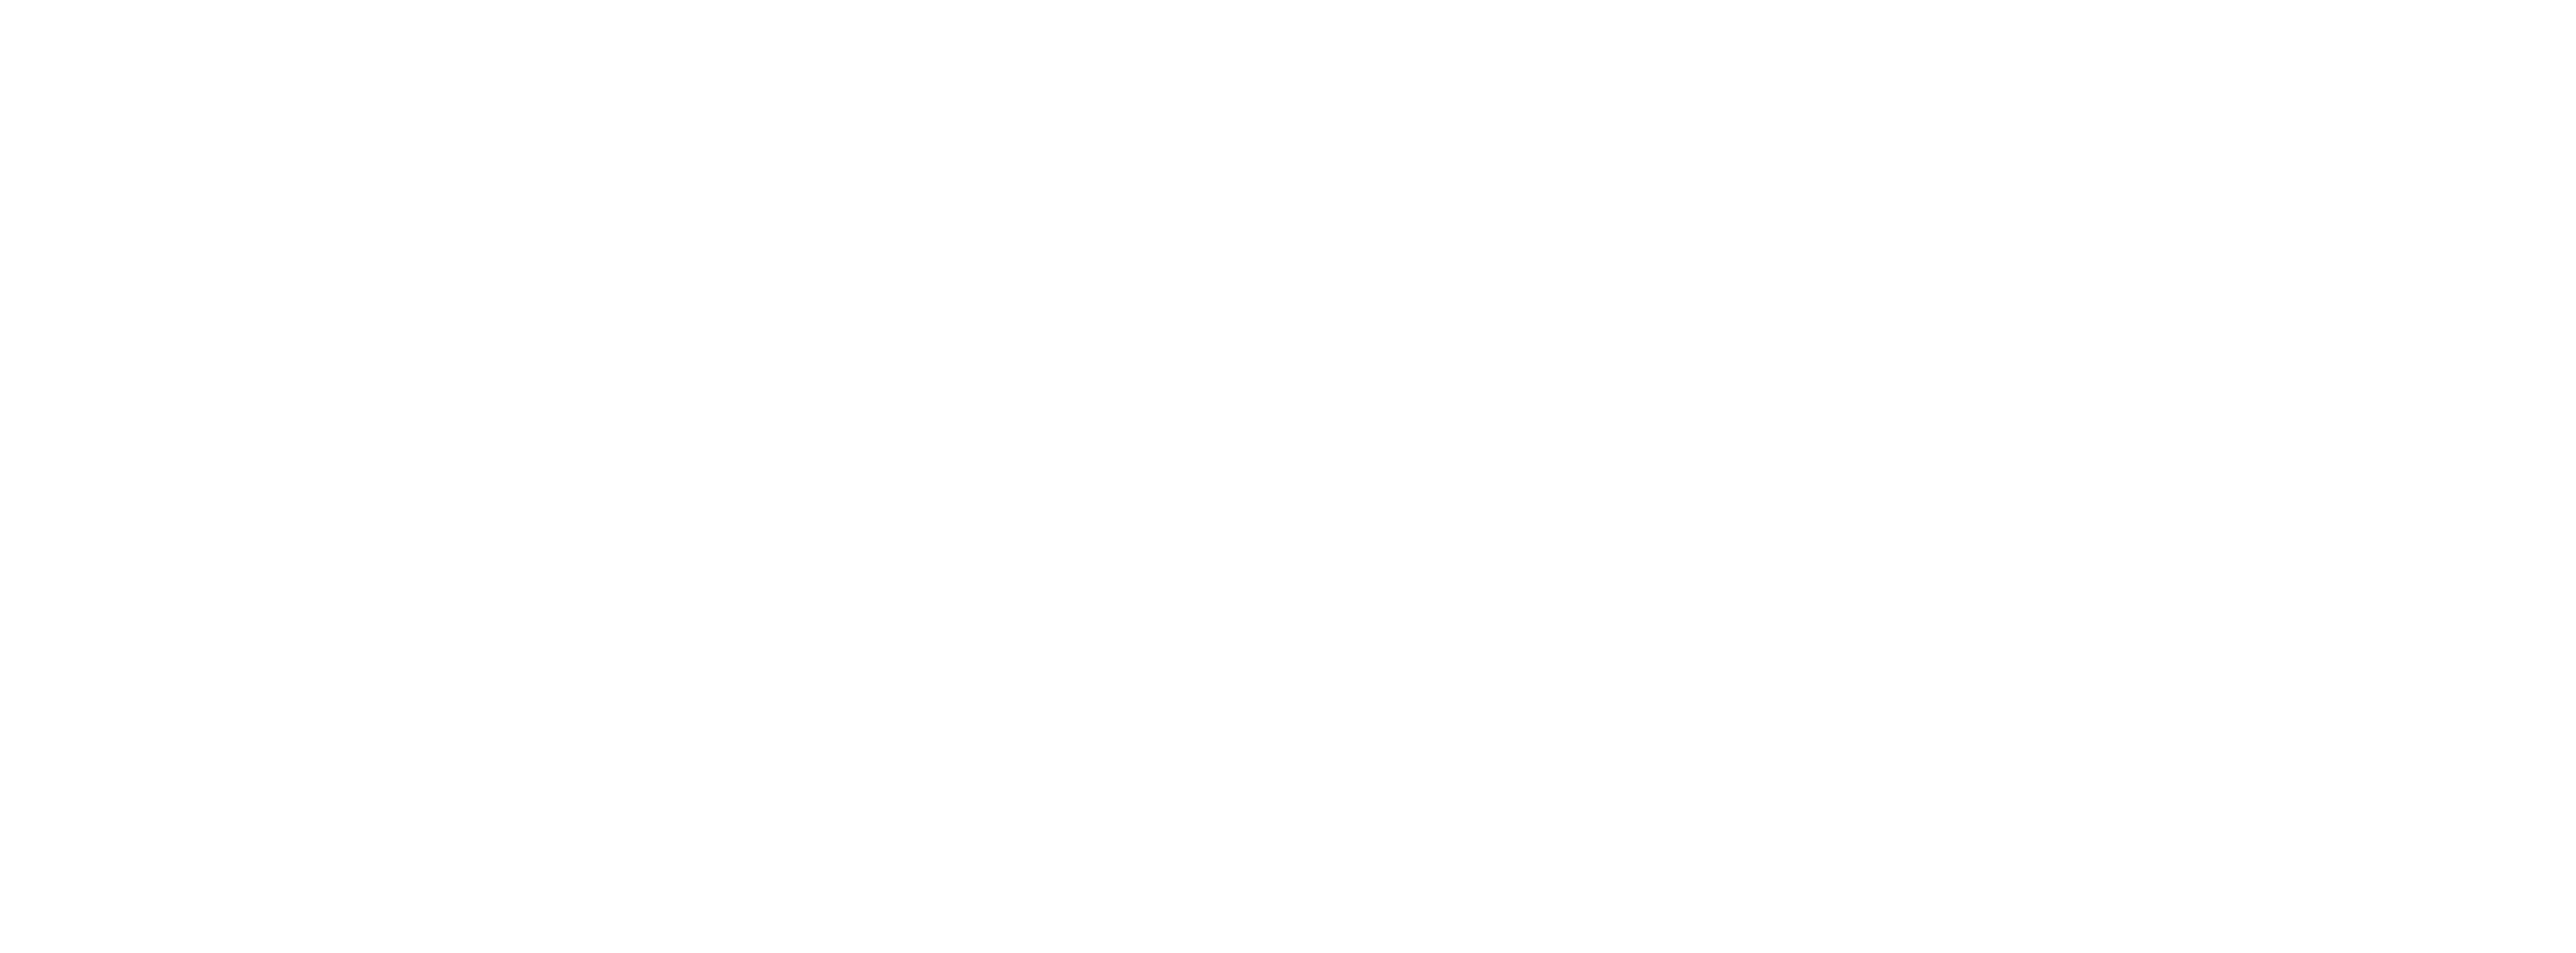 Nightingale NDIS Software Australia